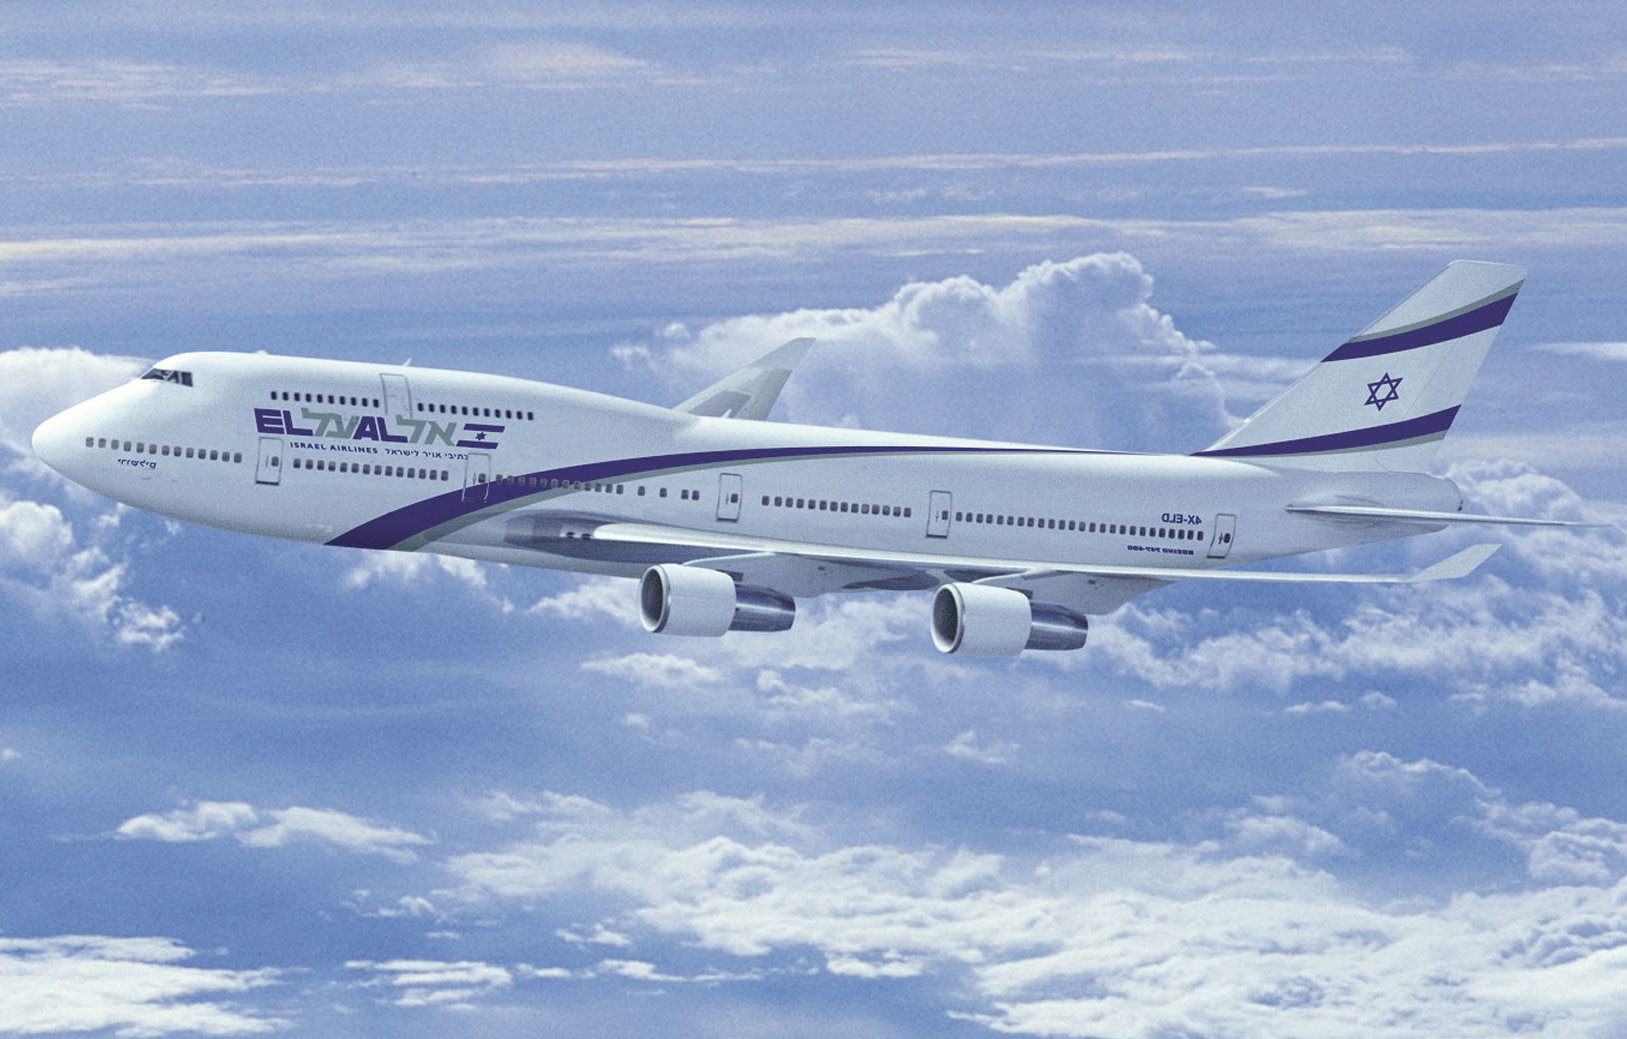 Эль аль отзывы. Боинг 747 el al. Израильские авиалинии Боинг 747. Самолёт авиакомпаний Эль Аль.